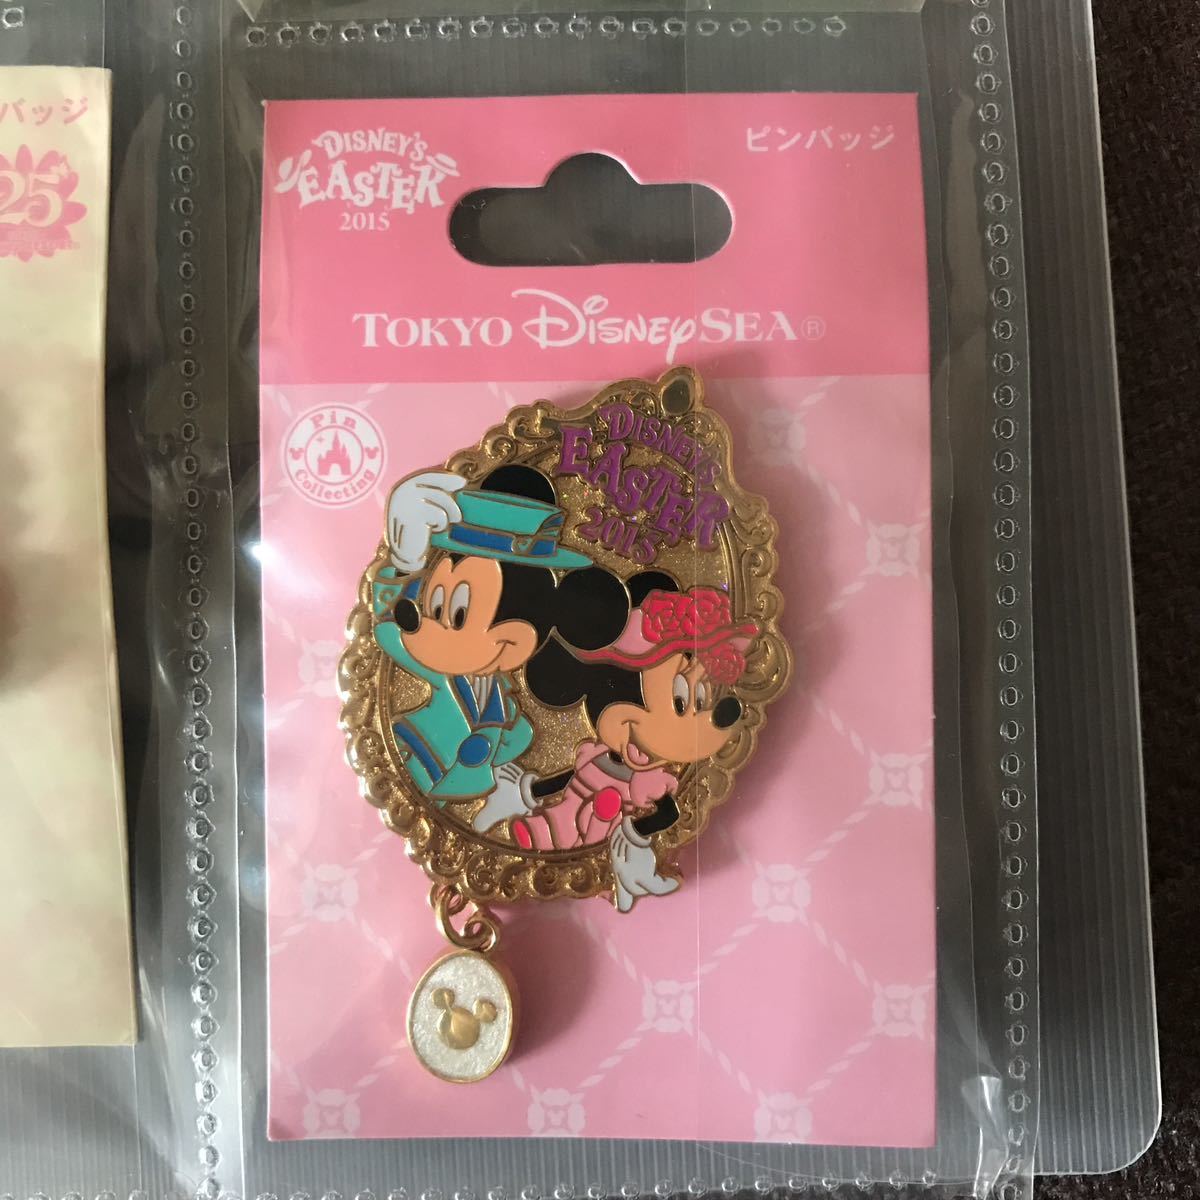  Disney si-2015 e-s ta- pin badge pin bachi Mickey minnie egTDR TDS springs 